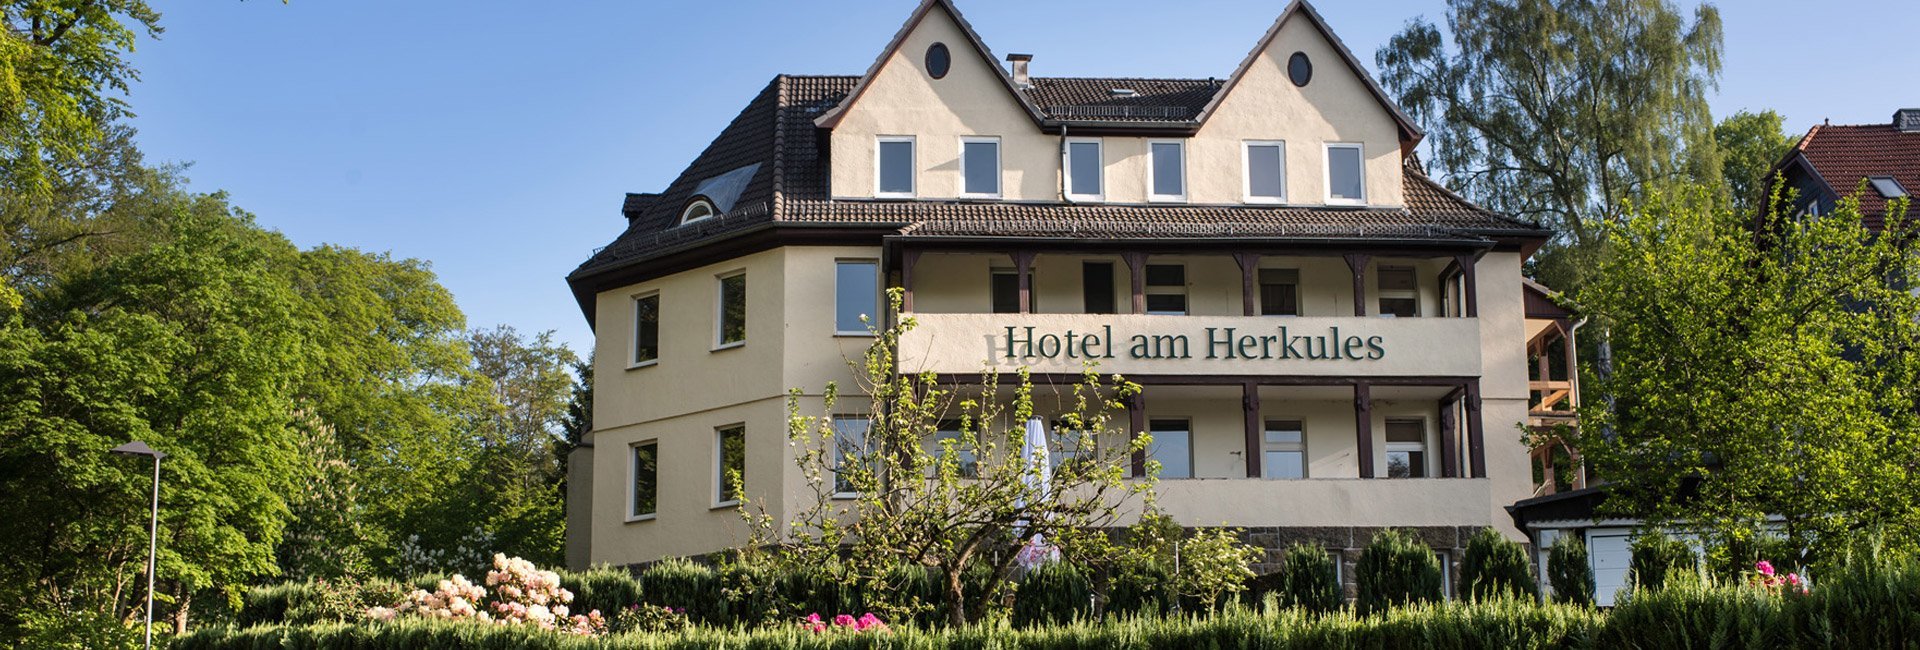 3 Tage Wandern im Habichtswald! – Hotel am Herkules  in Kassel, Hessen inkl. Frühstück